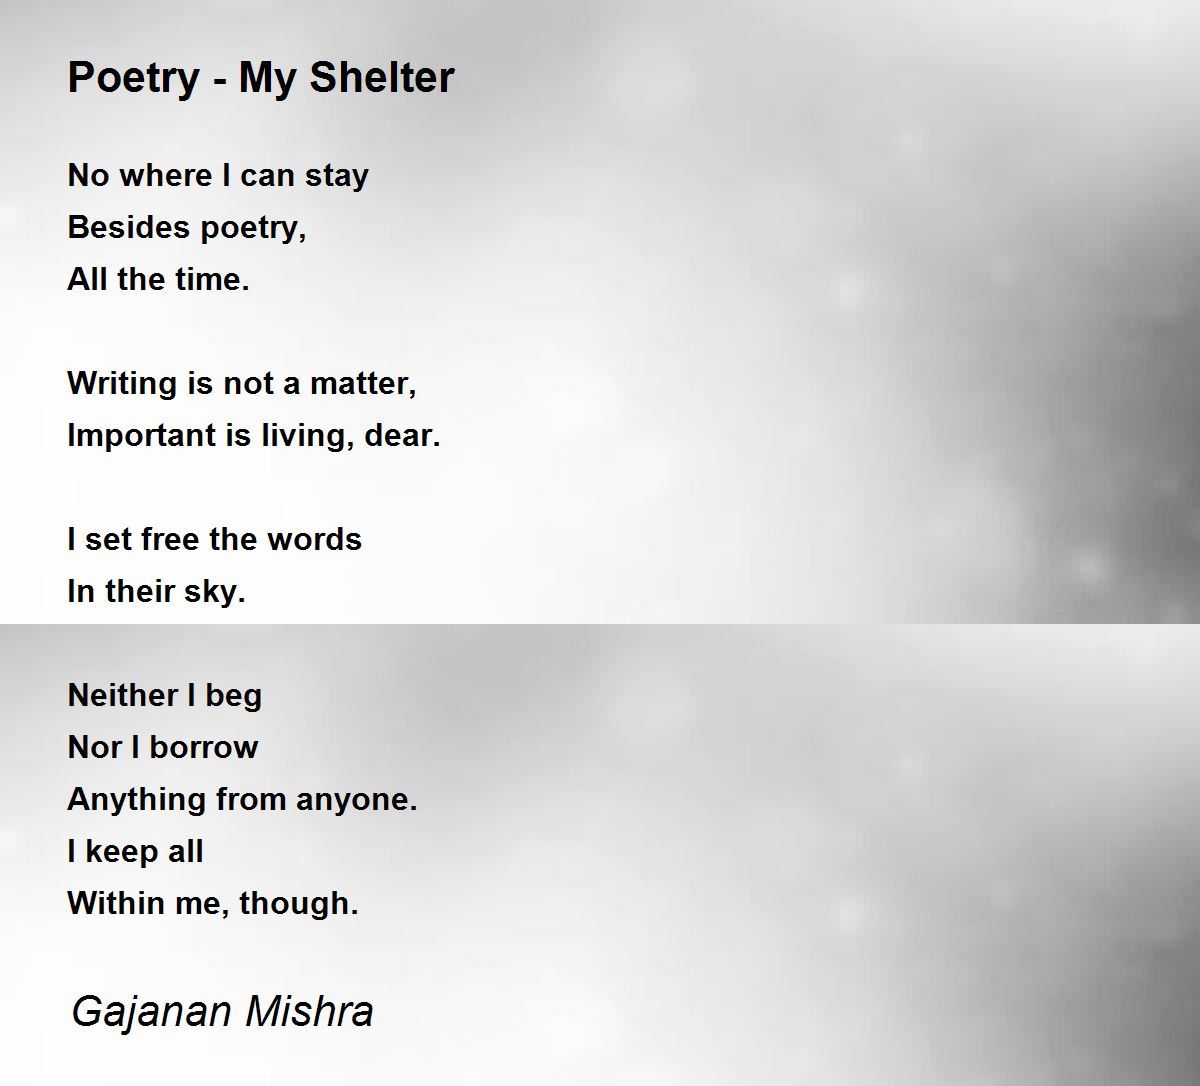 Poetry - My Shelter - Poetry - My Shelter Poem by Gajanan Mishra